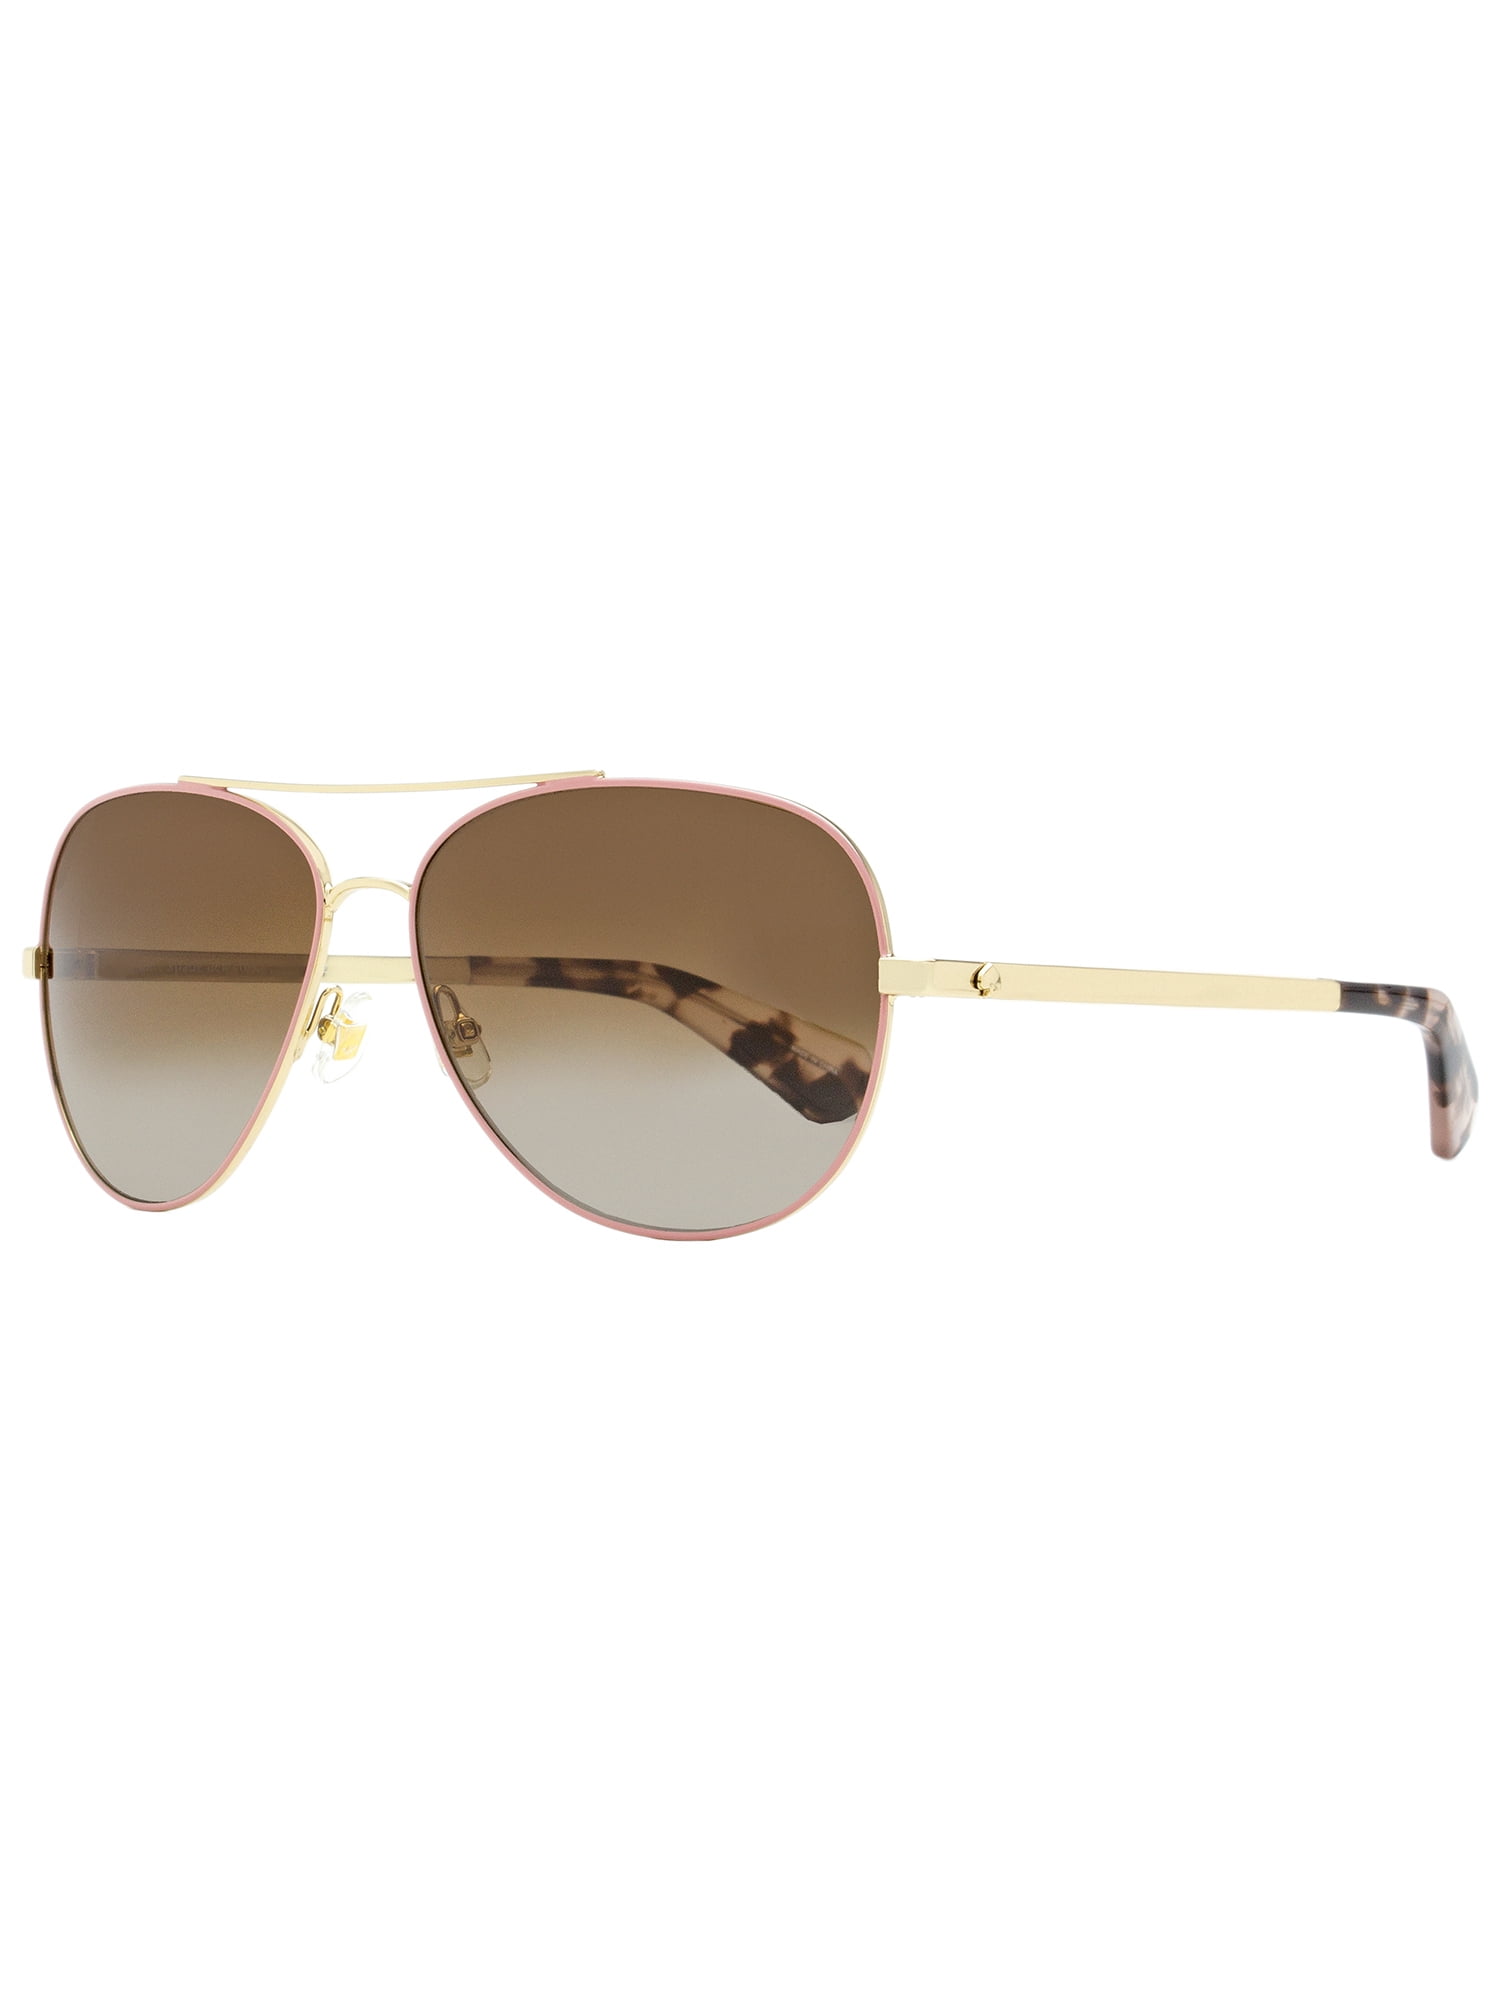 Kate Spade Aviator Sunglasses Avaline2/S 35JLA Gold/Pink/Rose Havana  Polarized 58mm 